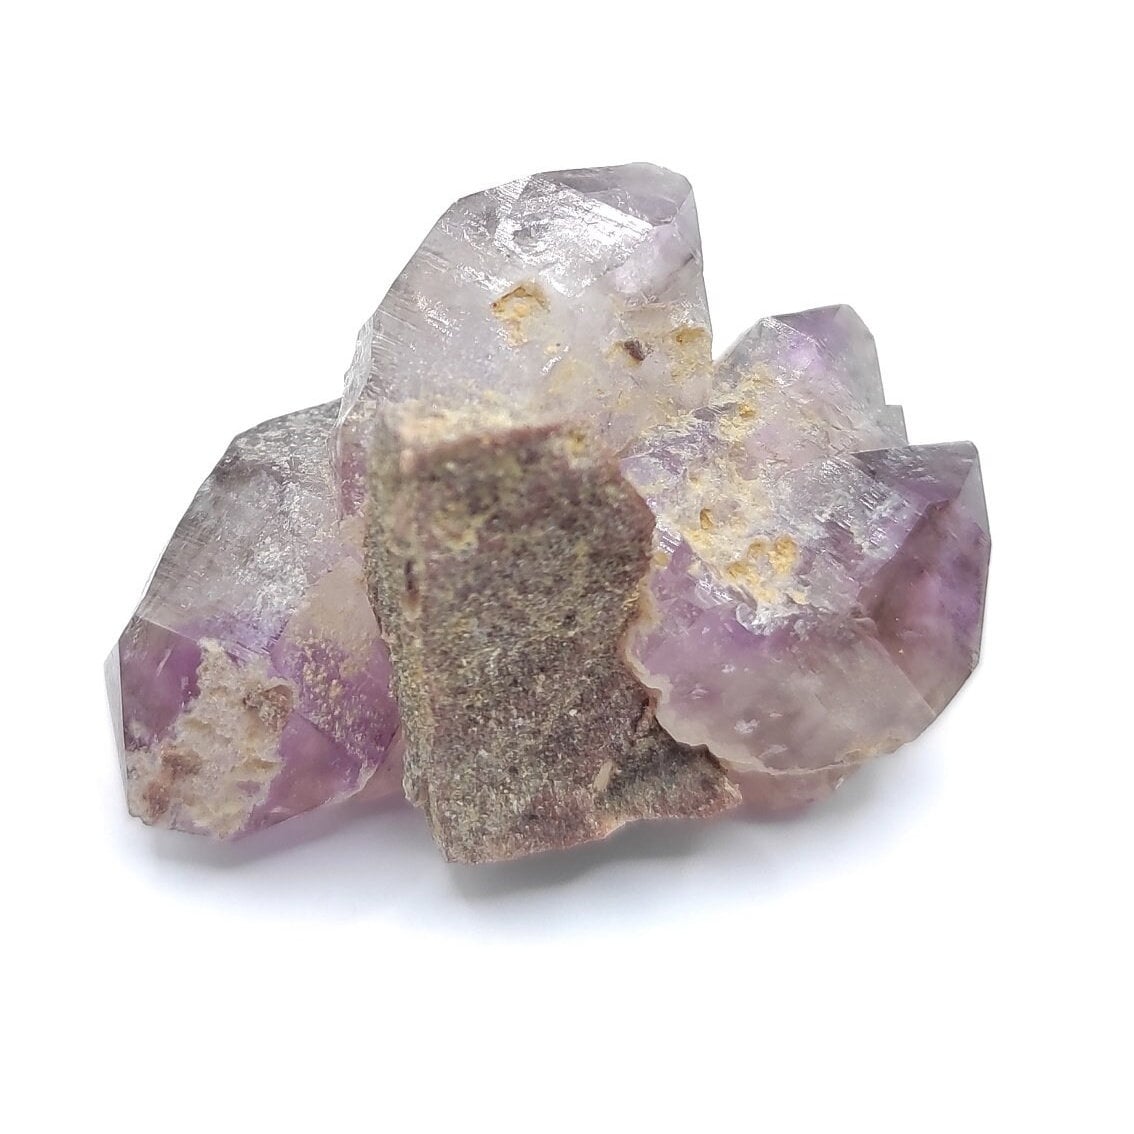 11.39g Double Terminated Amethyst from Kazakhstan - DT Purple Amethyst Crystal - Lake Balkhash, Kazakhstan - Natural Mineral Specimen